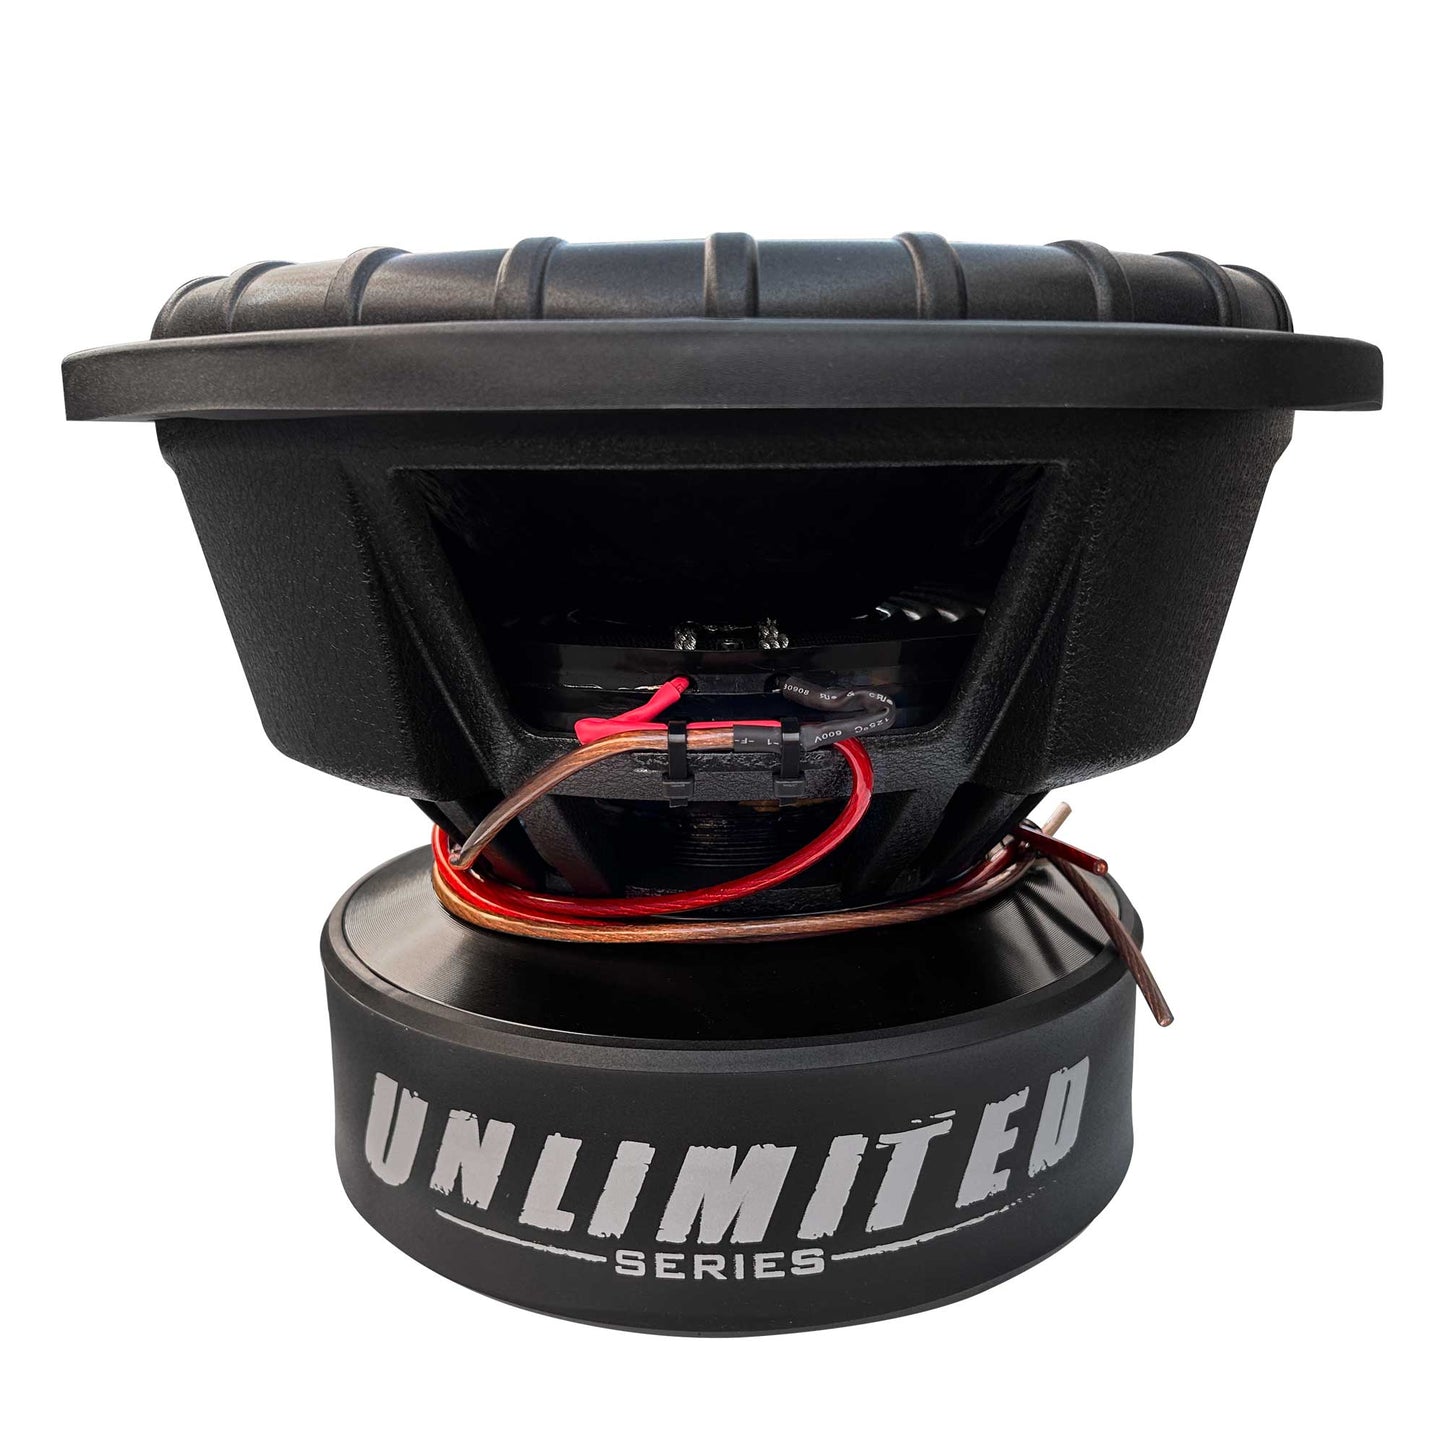 EDU15SPL-E2 | EDGE Unlimited Series 15 inch 10000 watts Max Subwoofer